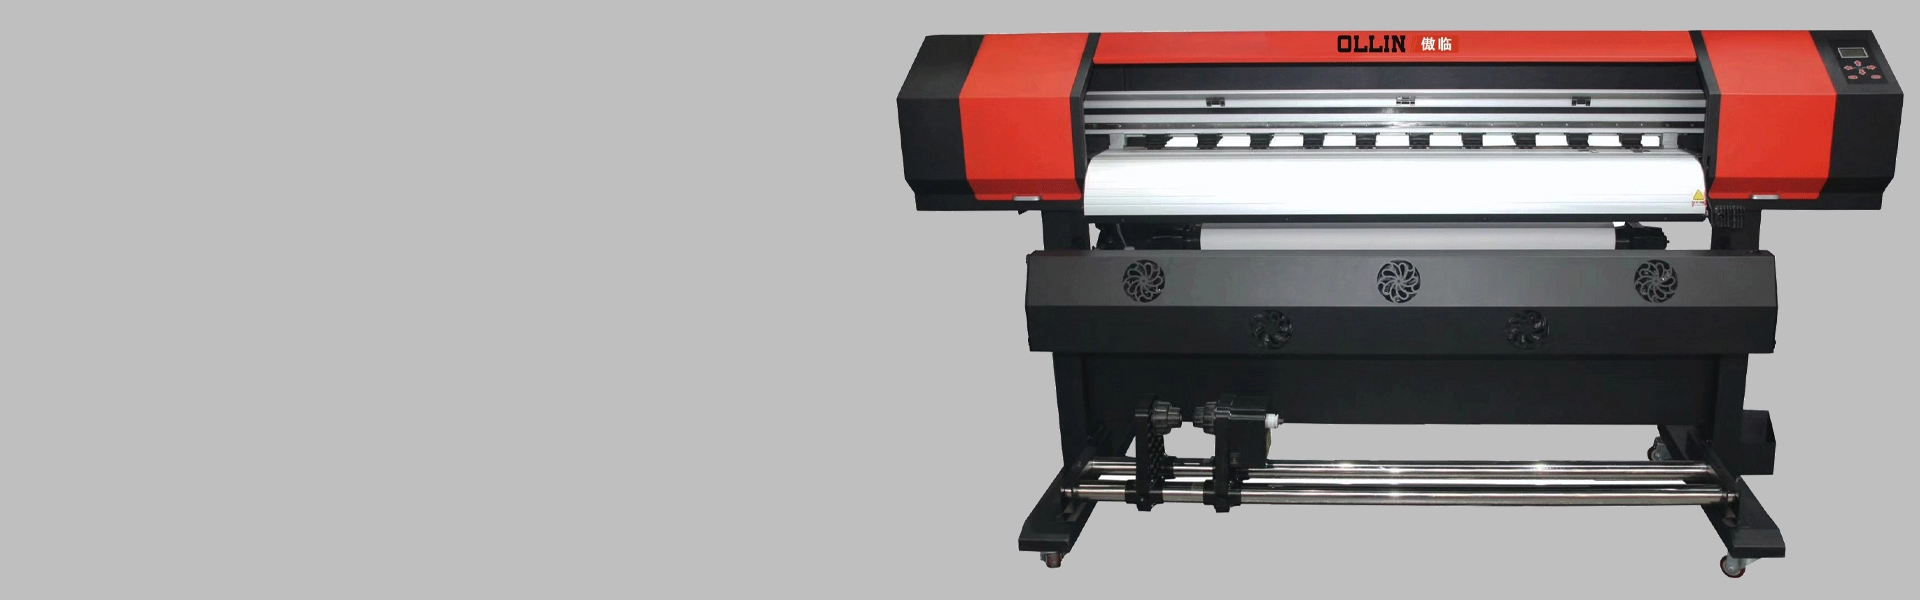 Imprimante XP600 de 1,2 m